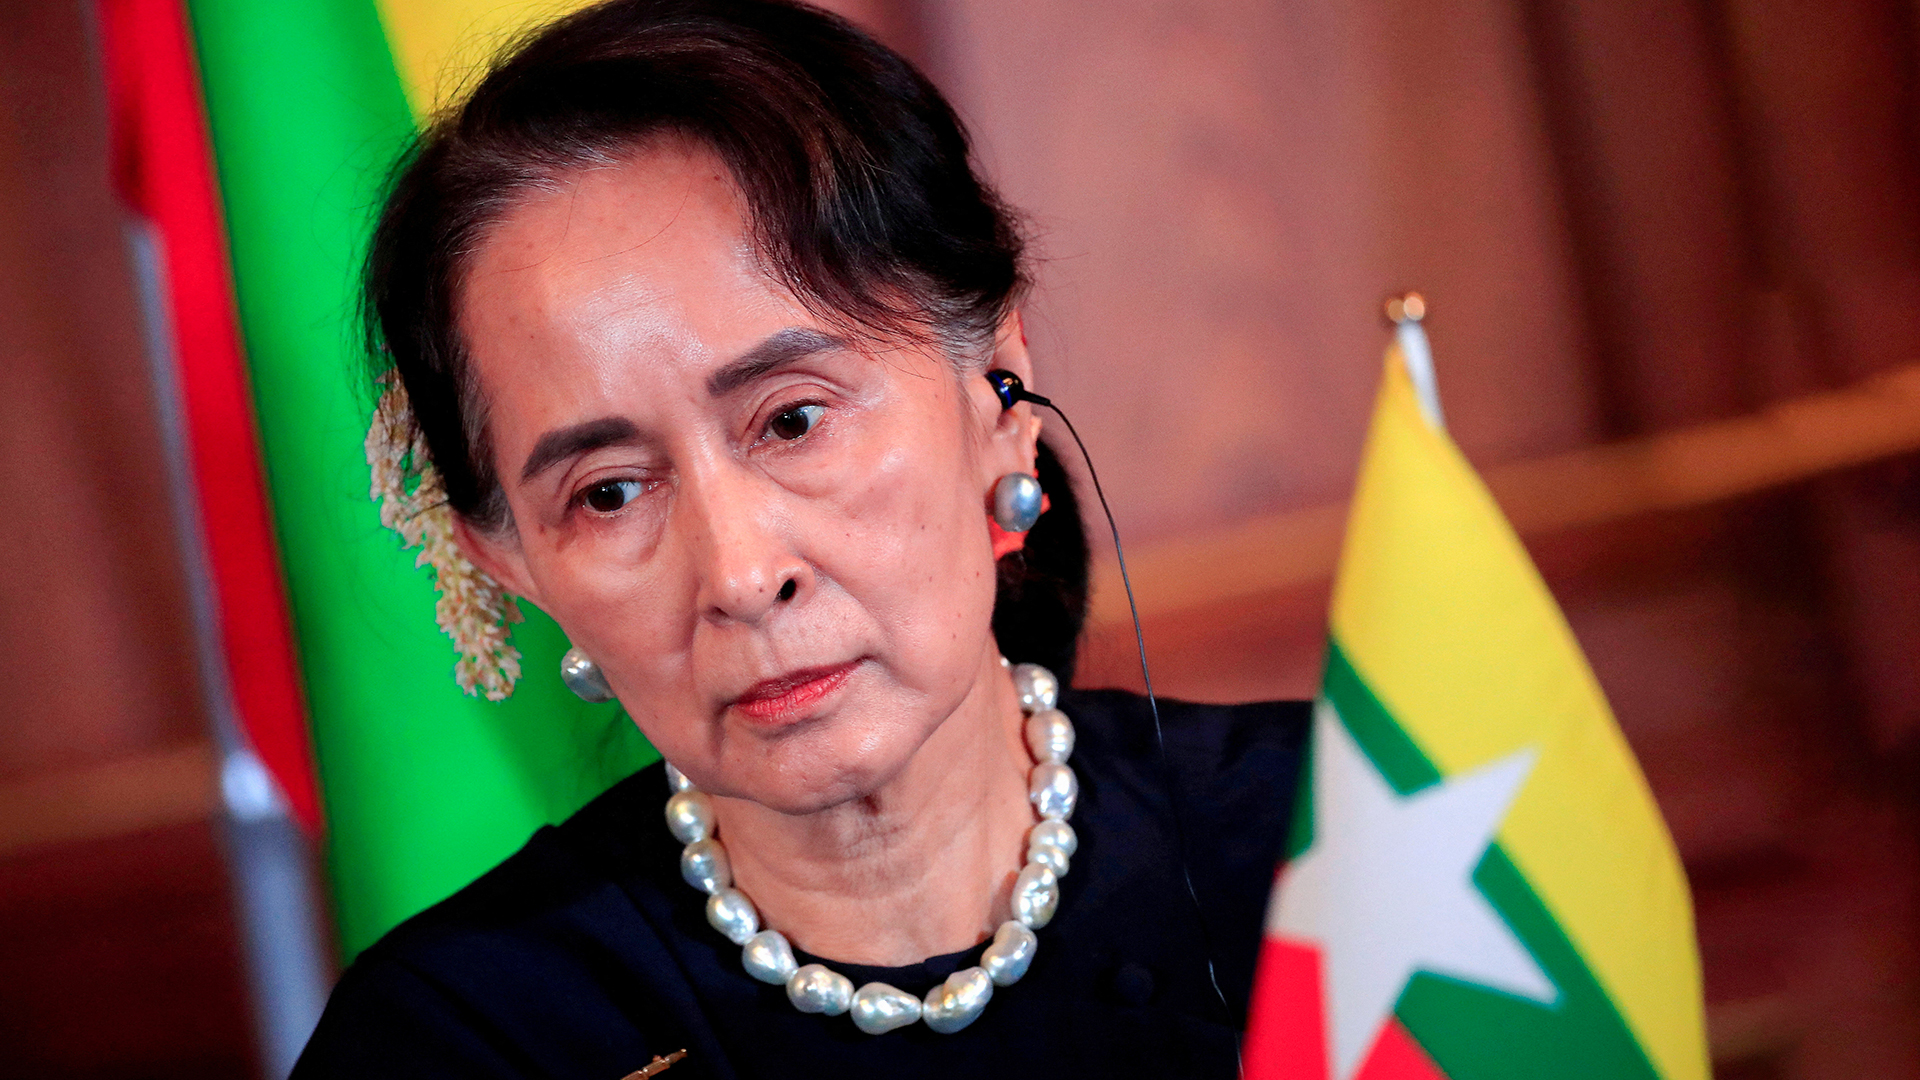 ARCHIVBILD: Aung San Suu Kyi | REUTERS